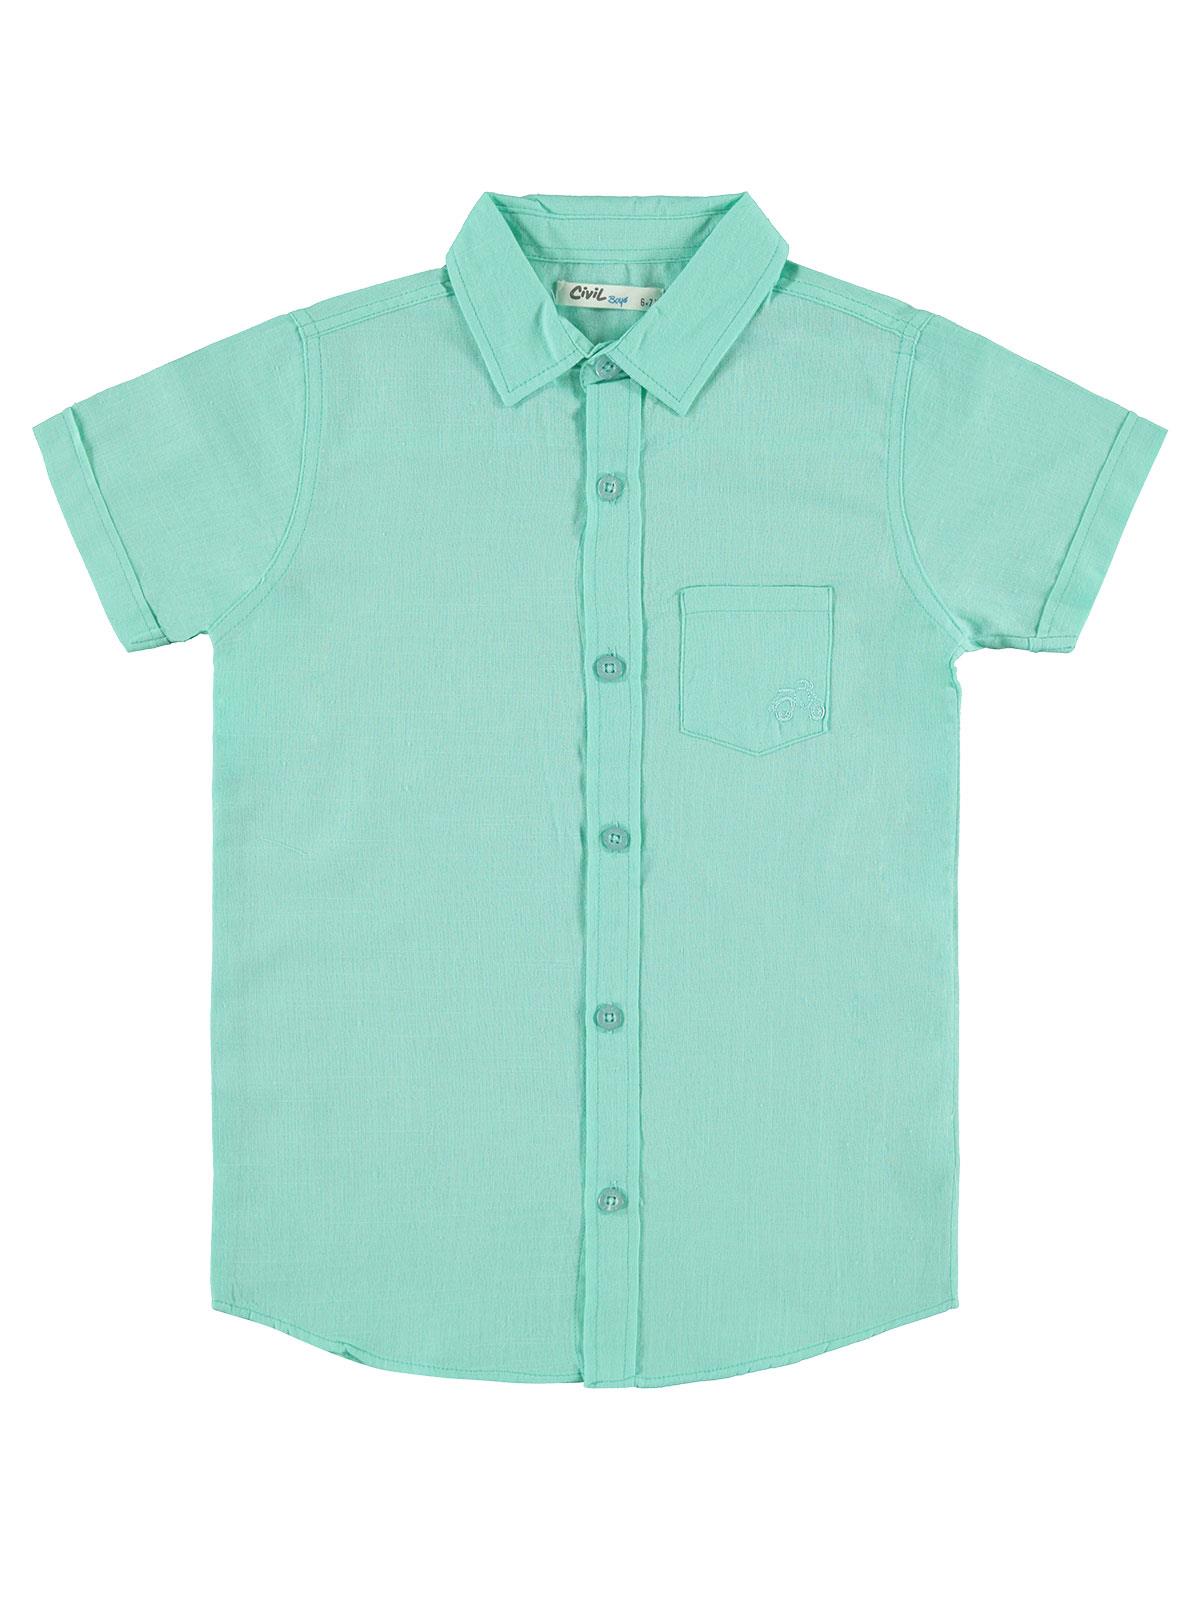 Civil Boys Erkek Çocuk Gömlek 6-9 Yaş Mint Yeşili